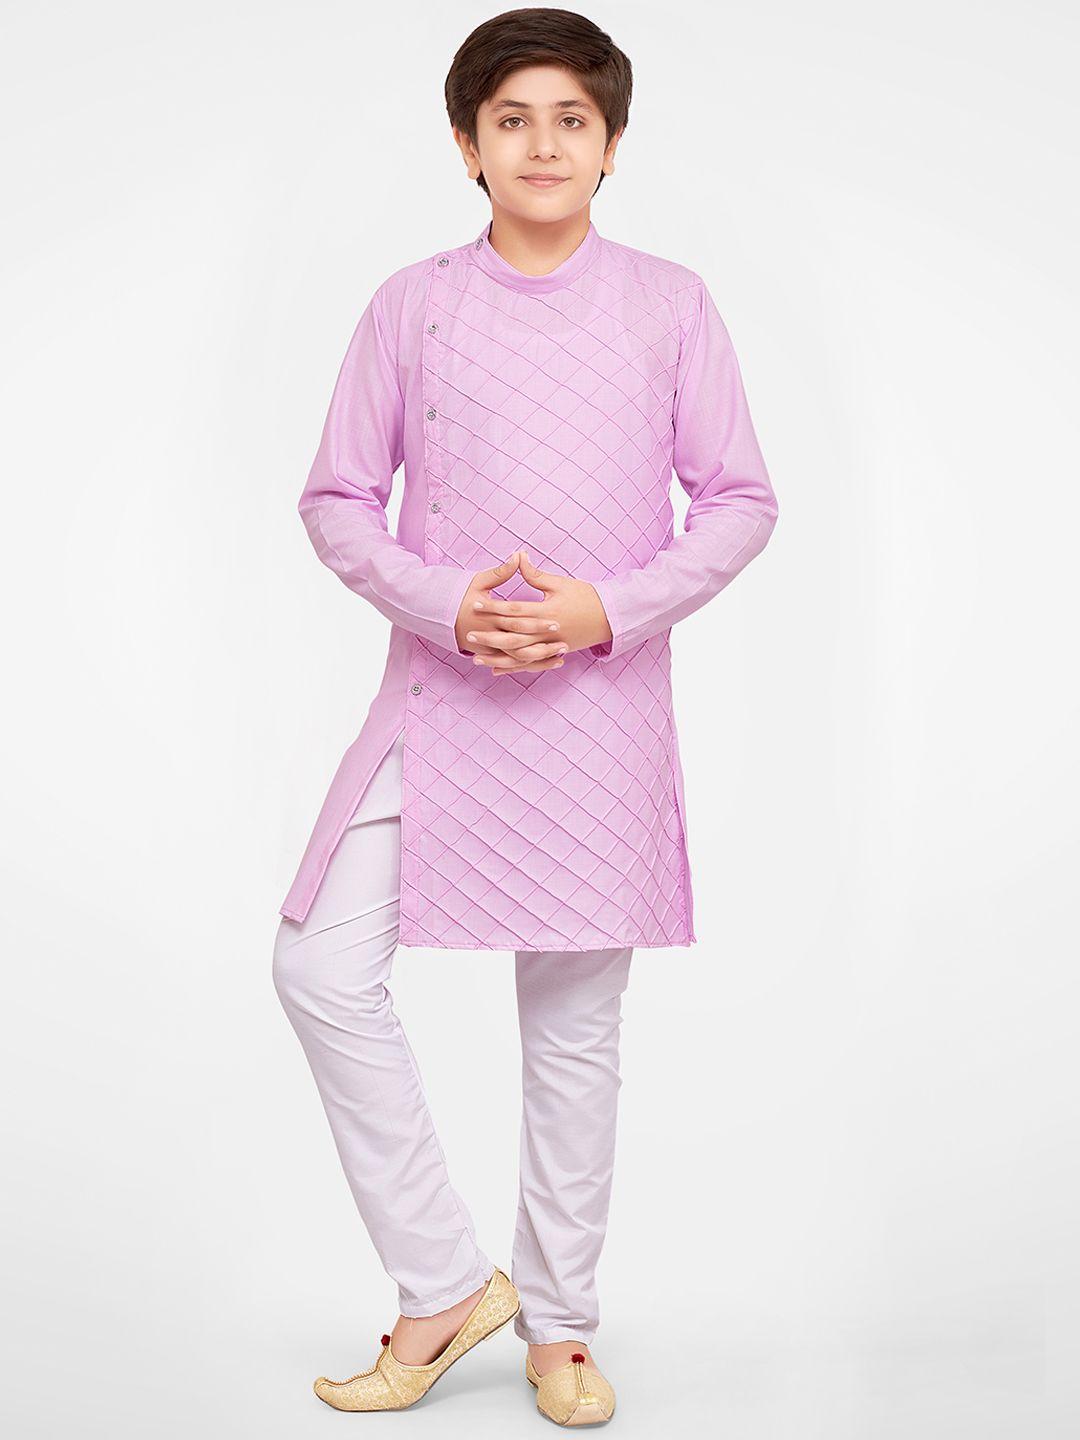 jeetethnics boys lavender kurta with pyjamas